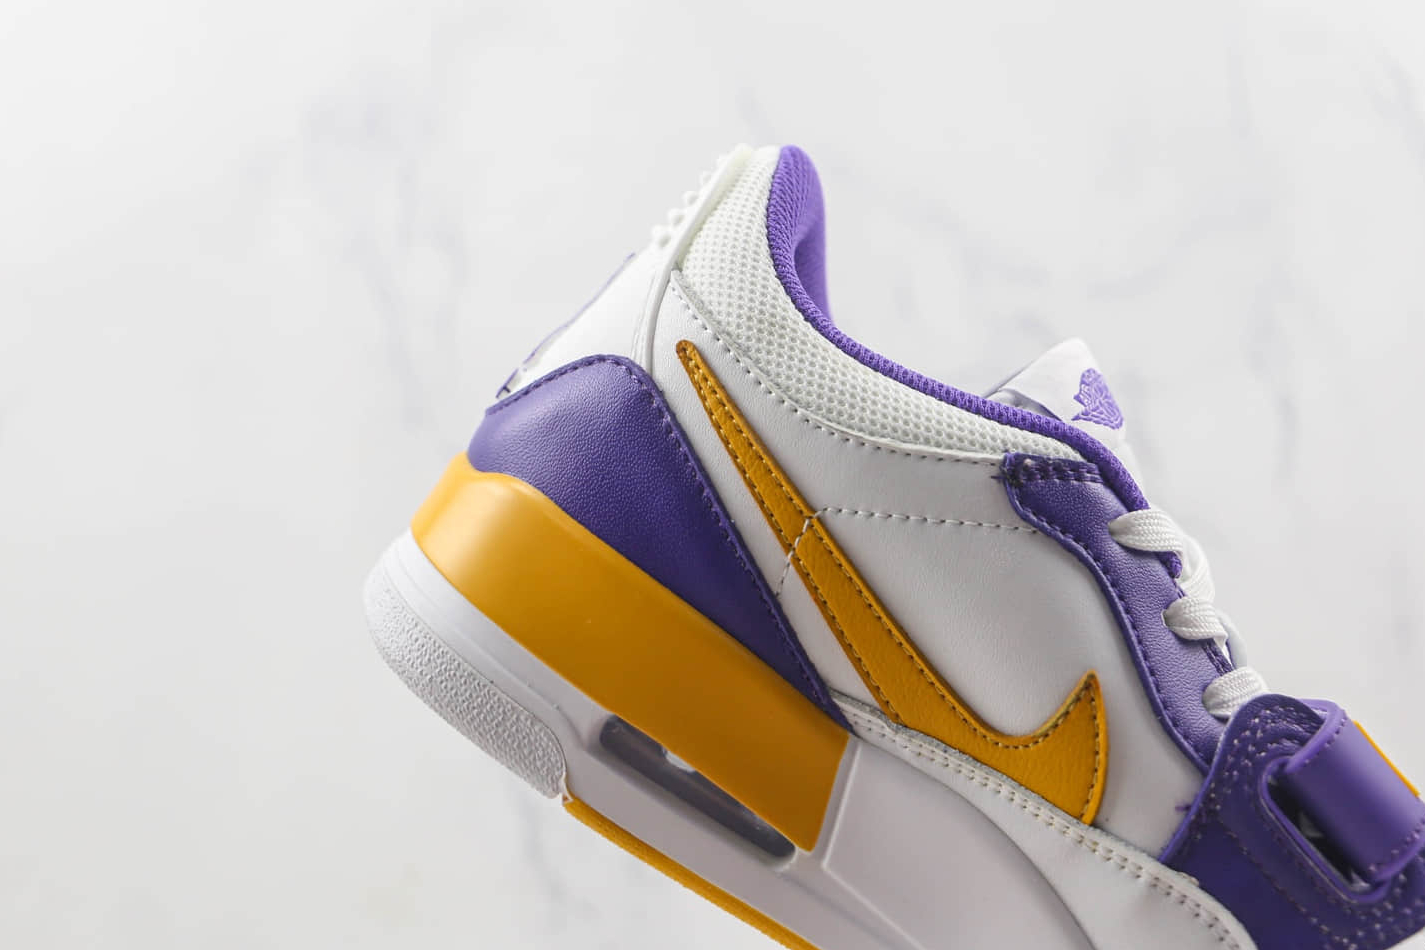 Nike Air Jordan Legacy 312 Low Purple White Yellow - Iconic Style for the Modern Sneakerhead